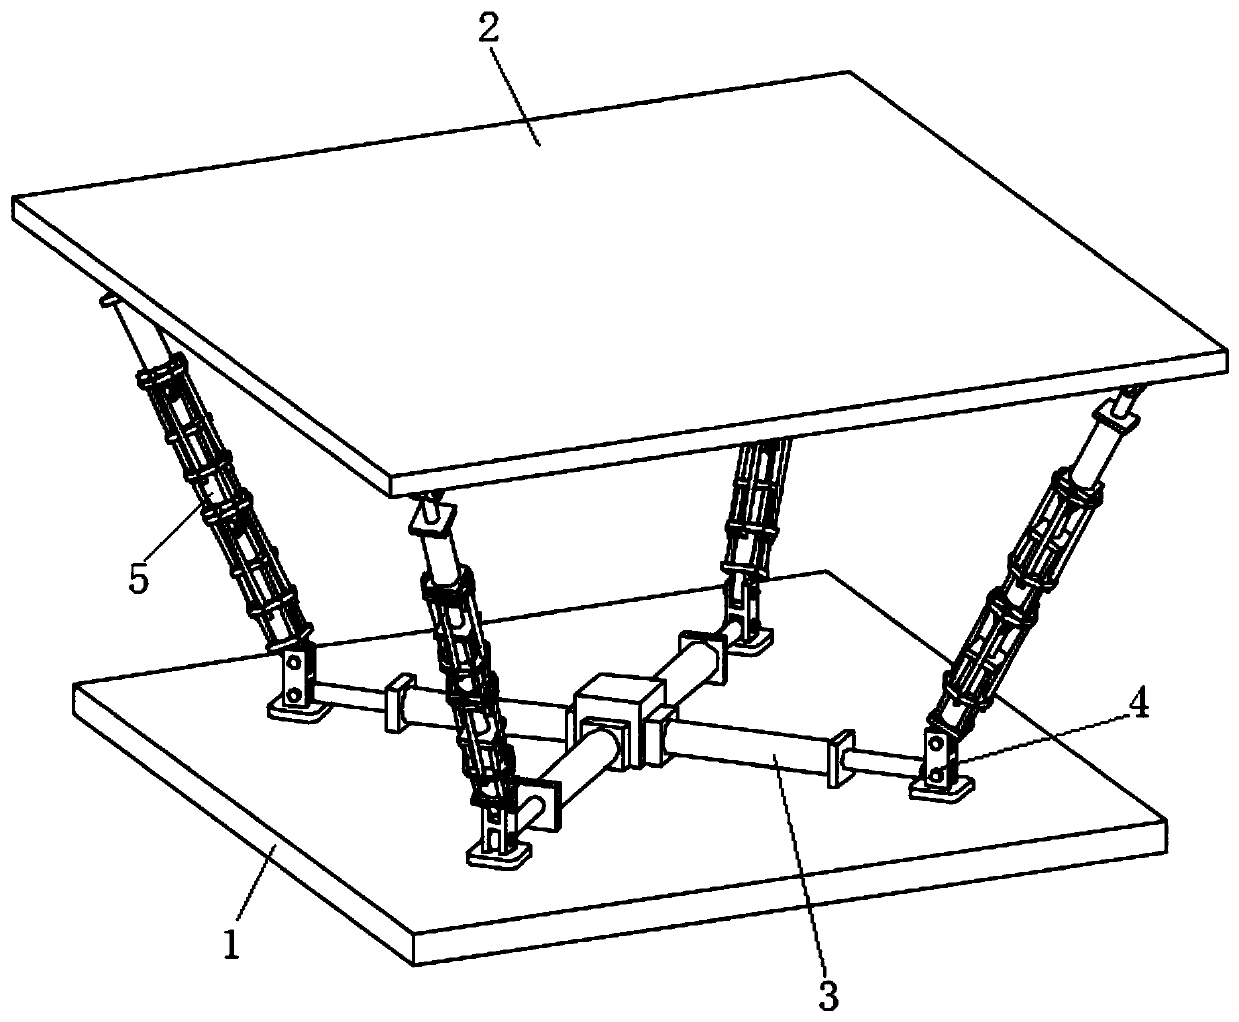 Multi-group hydraulic linkage lifting mechanism